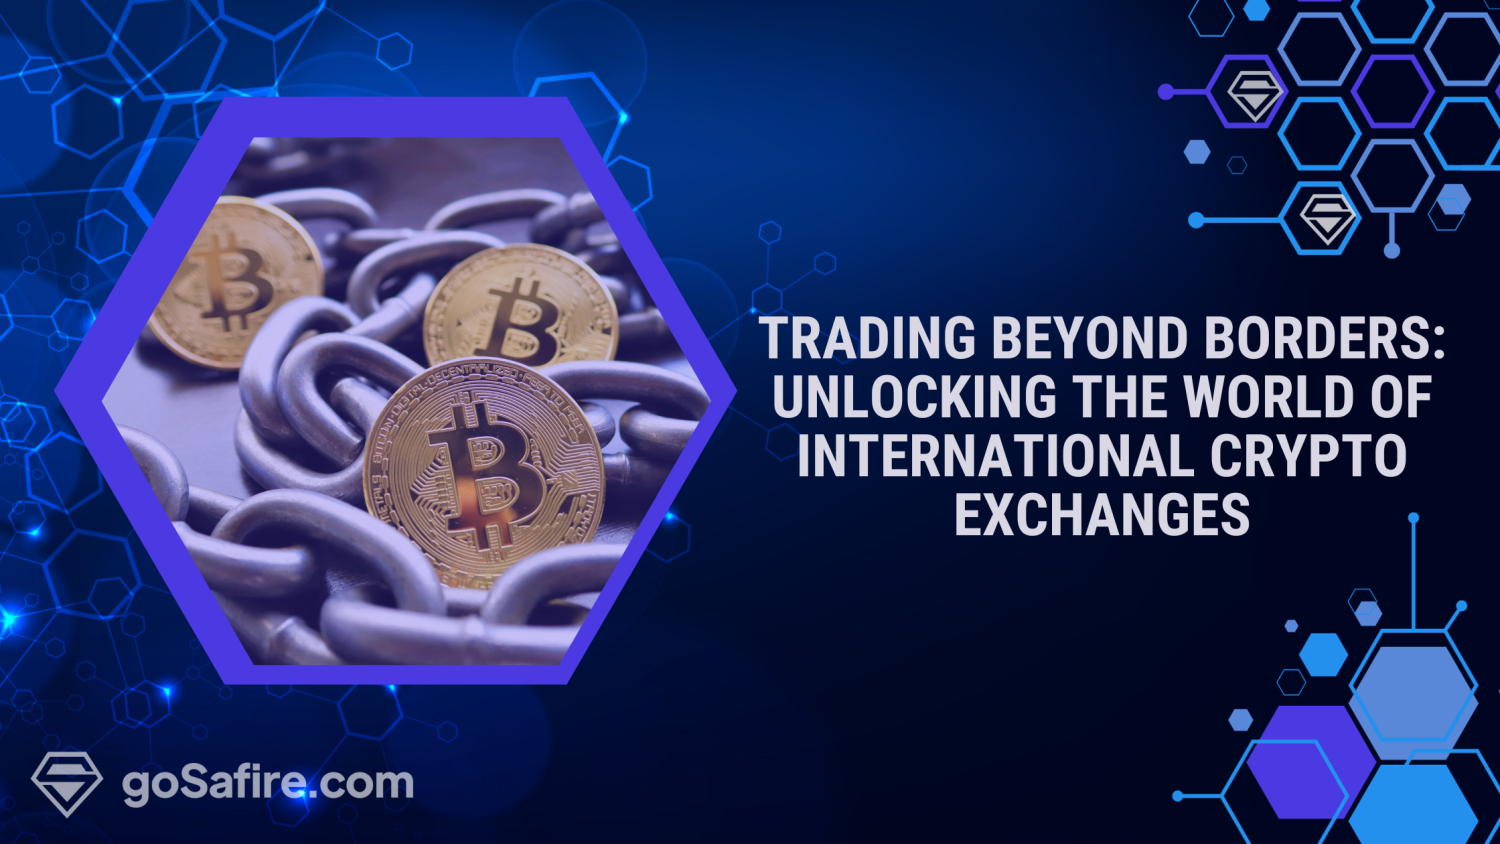 Trading Beyond Borders: Exploring International Crypto Exchanges